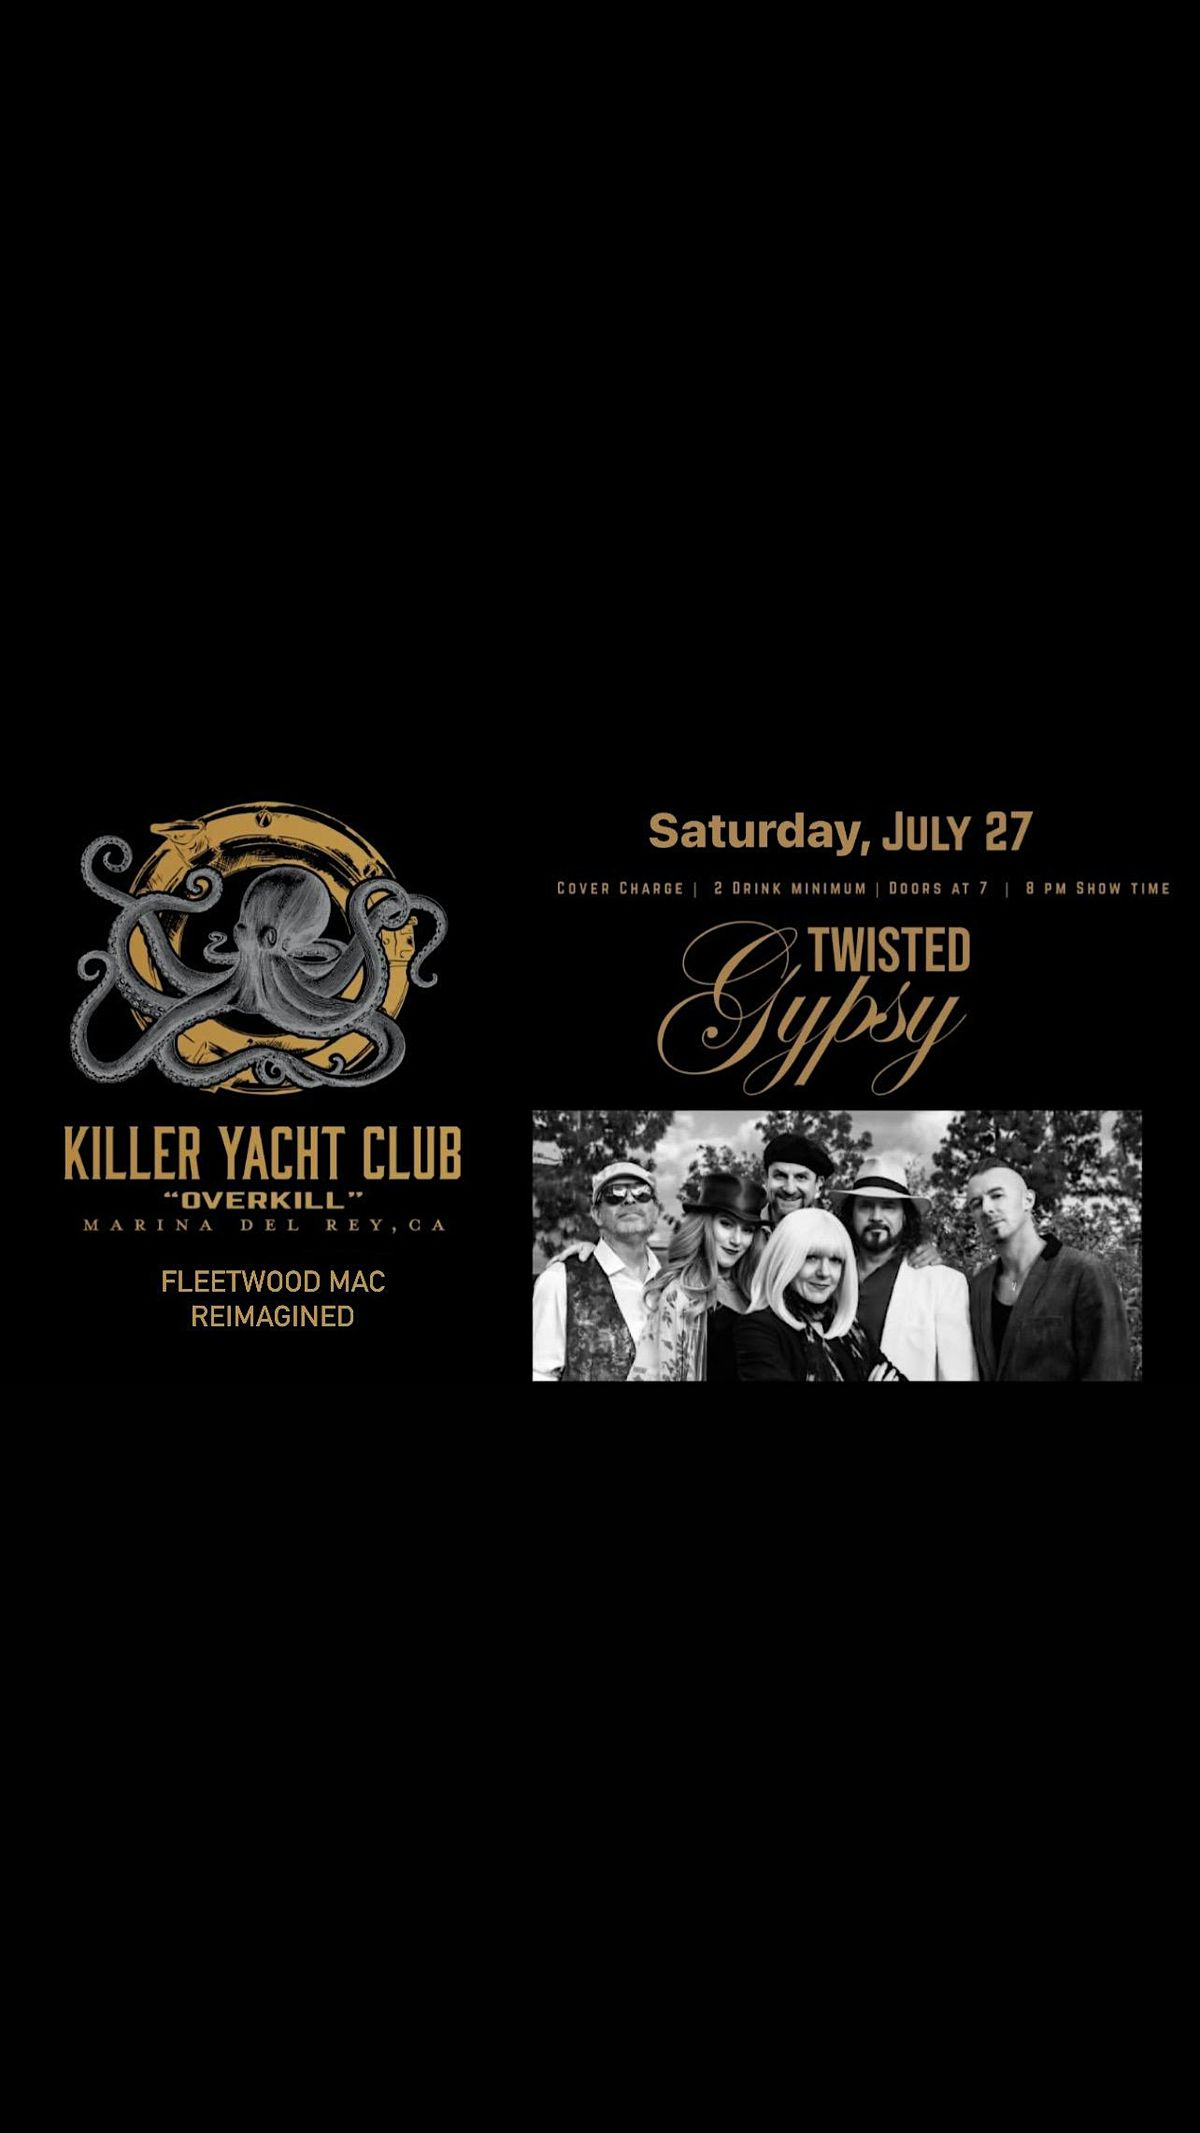 Killer Yacht Club OverKill Room: Twisted Gypsy Fleetwood Mac Reimagined